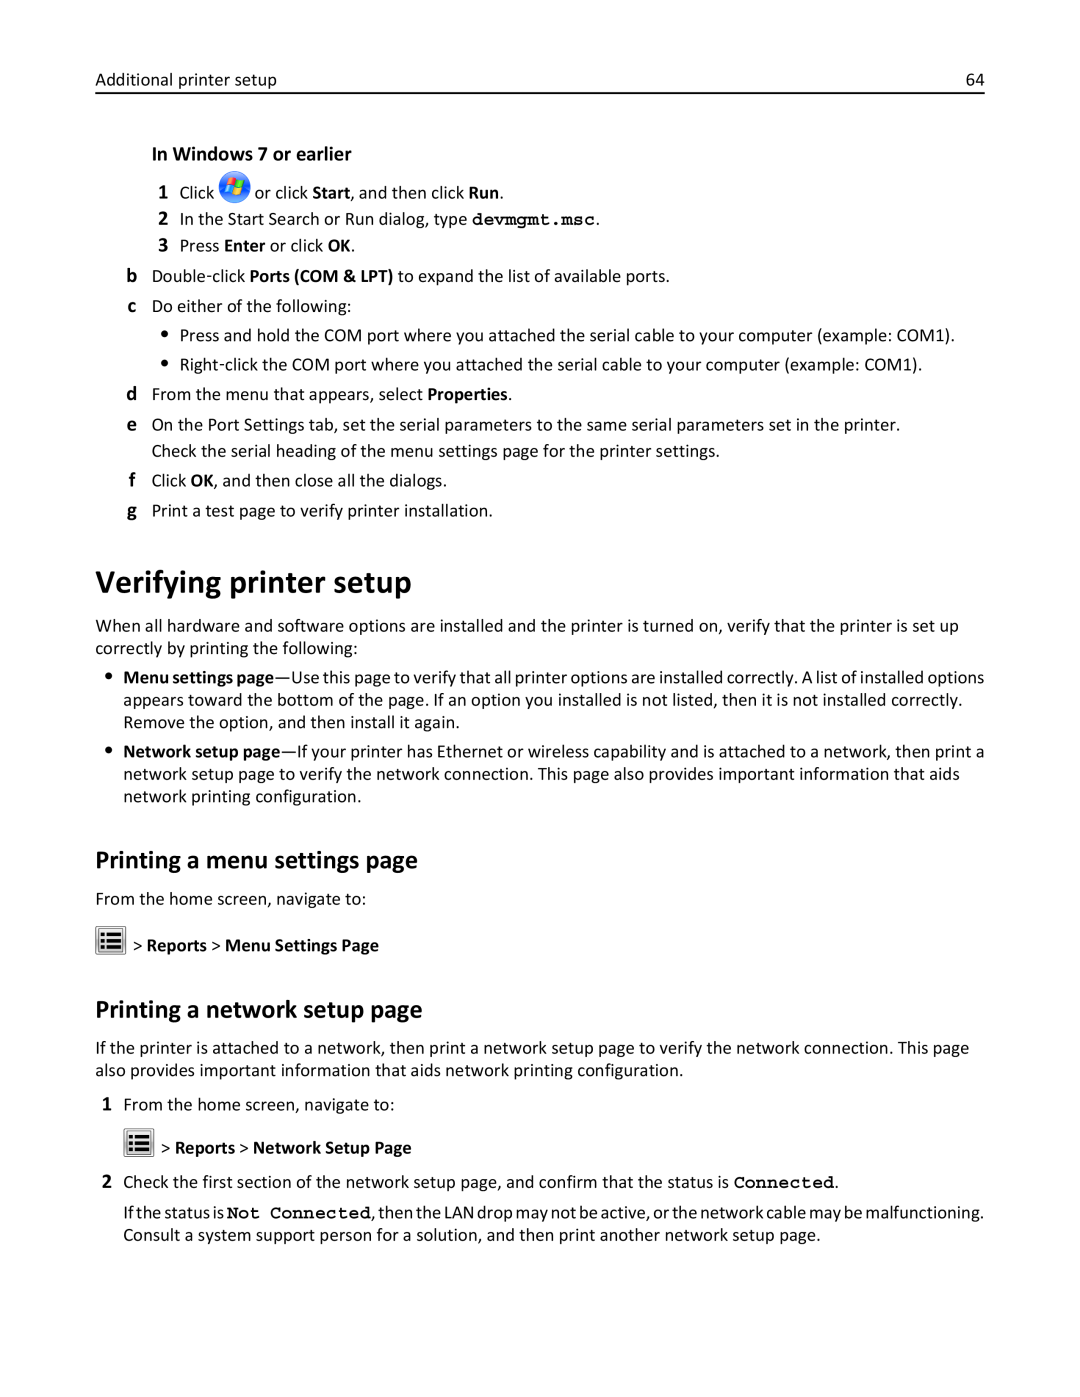 Lexmark 037 Verifying printer setup, Printing a menu settings page, Printing a network setup page, In Windows 7 or earlier 